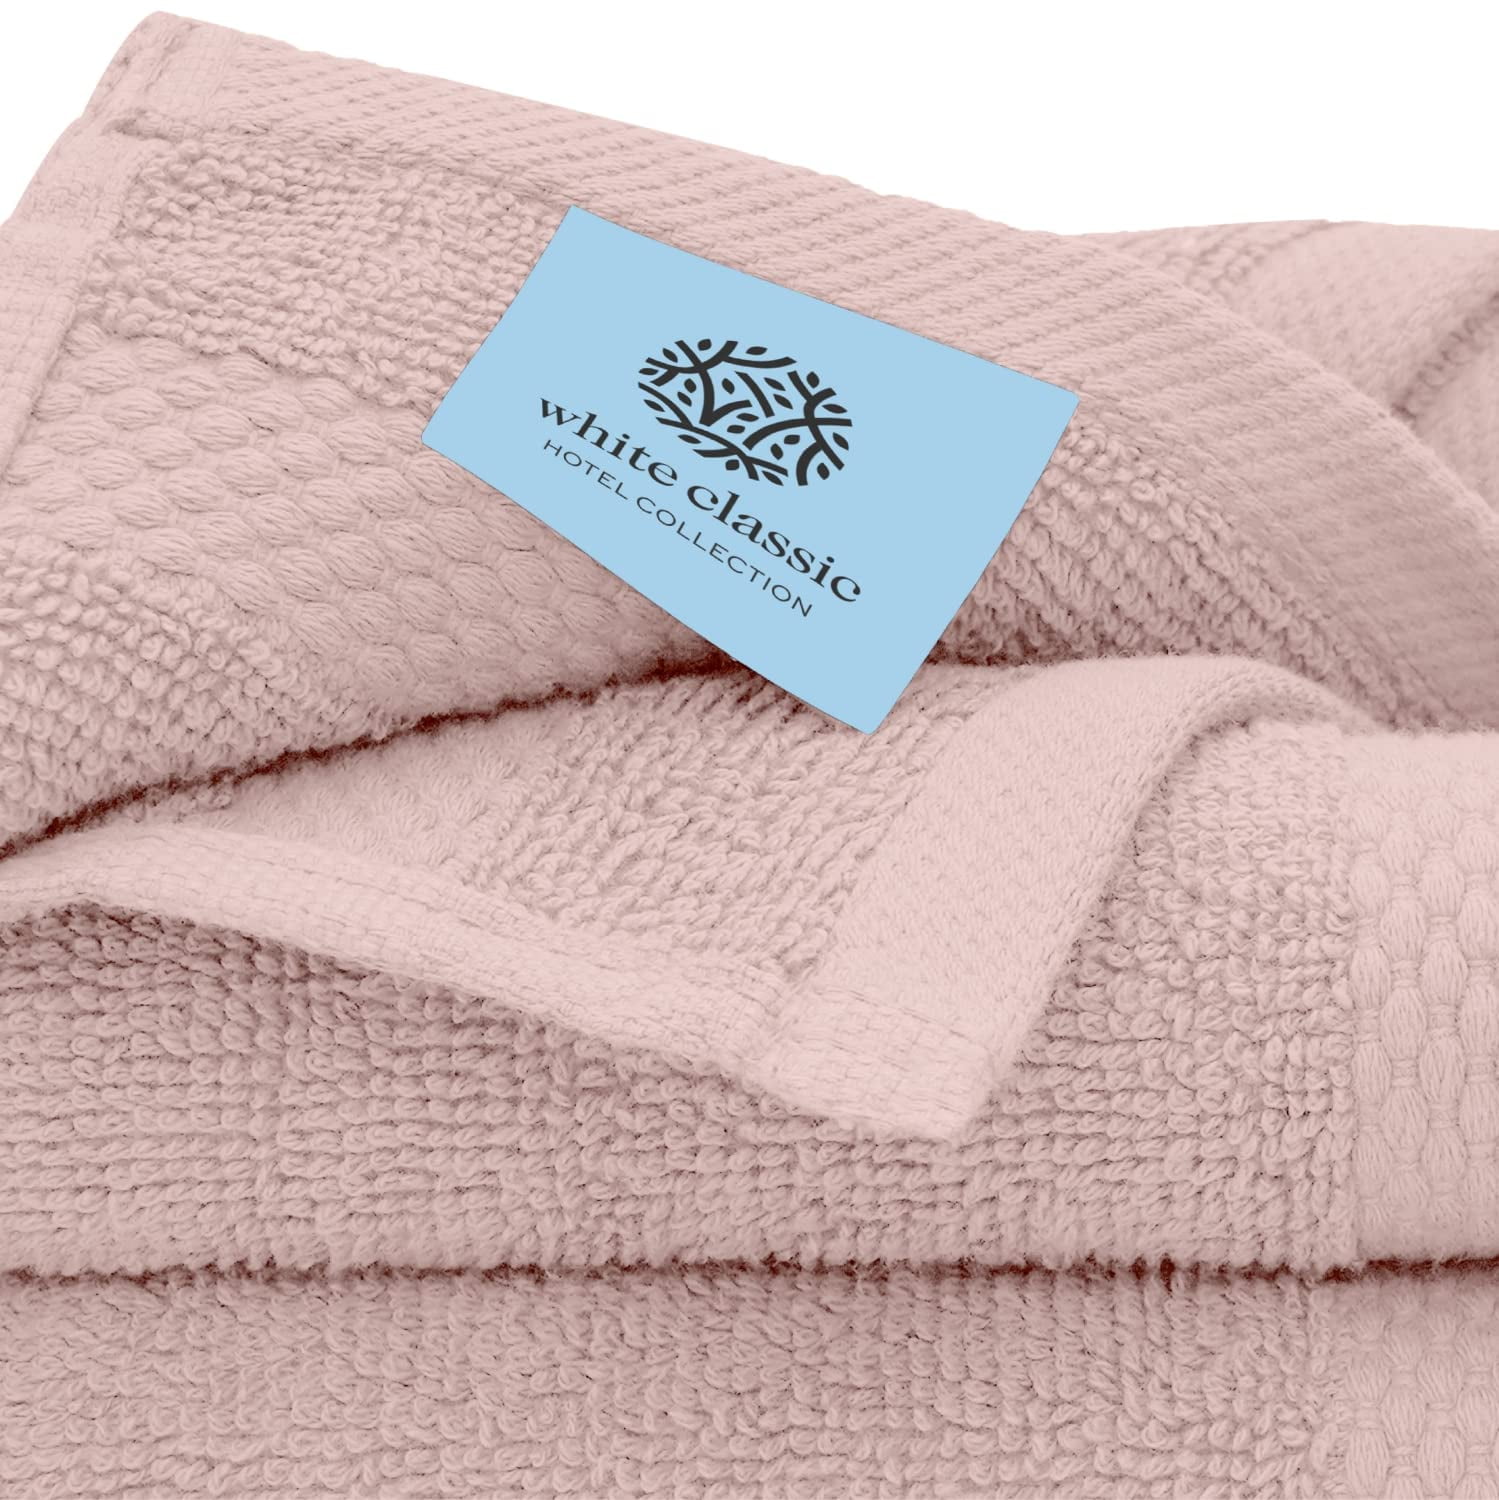 White Classic Luxury 100% Cotton 8 Piece Towel Set - 4x Washcloths, 2x  Hand, And 2x Bath Towels : Target